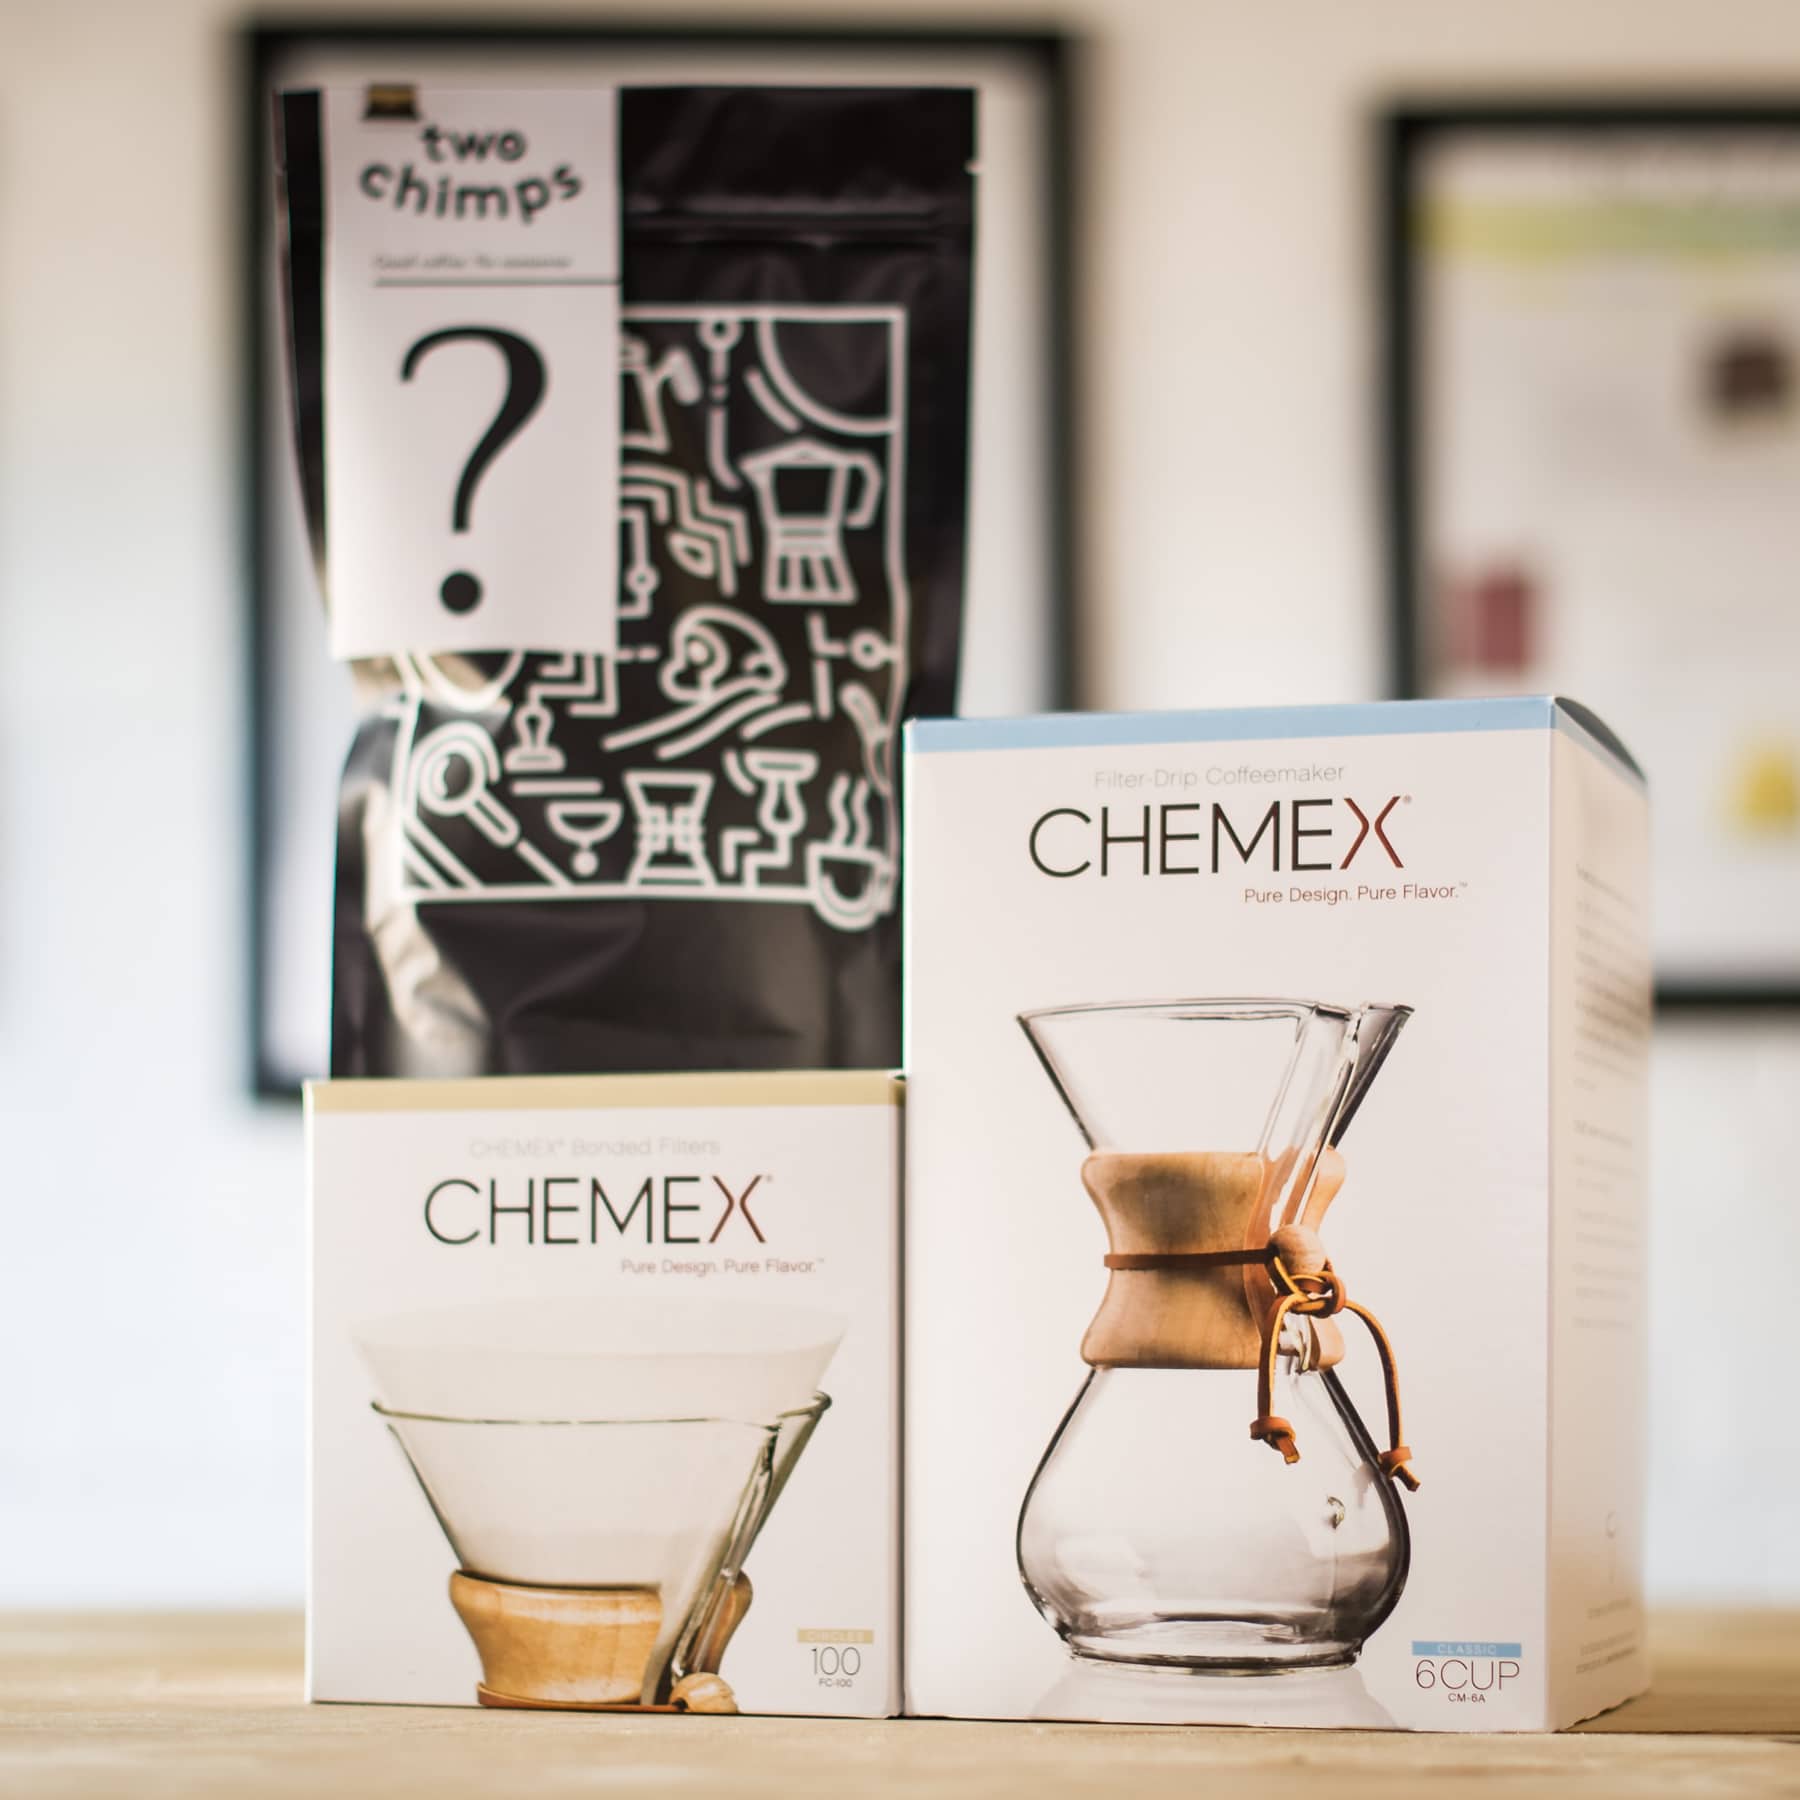 Chemex coffee maker with coffee